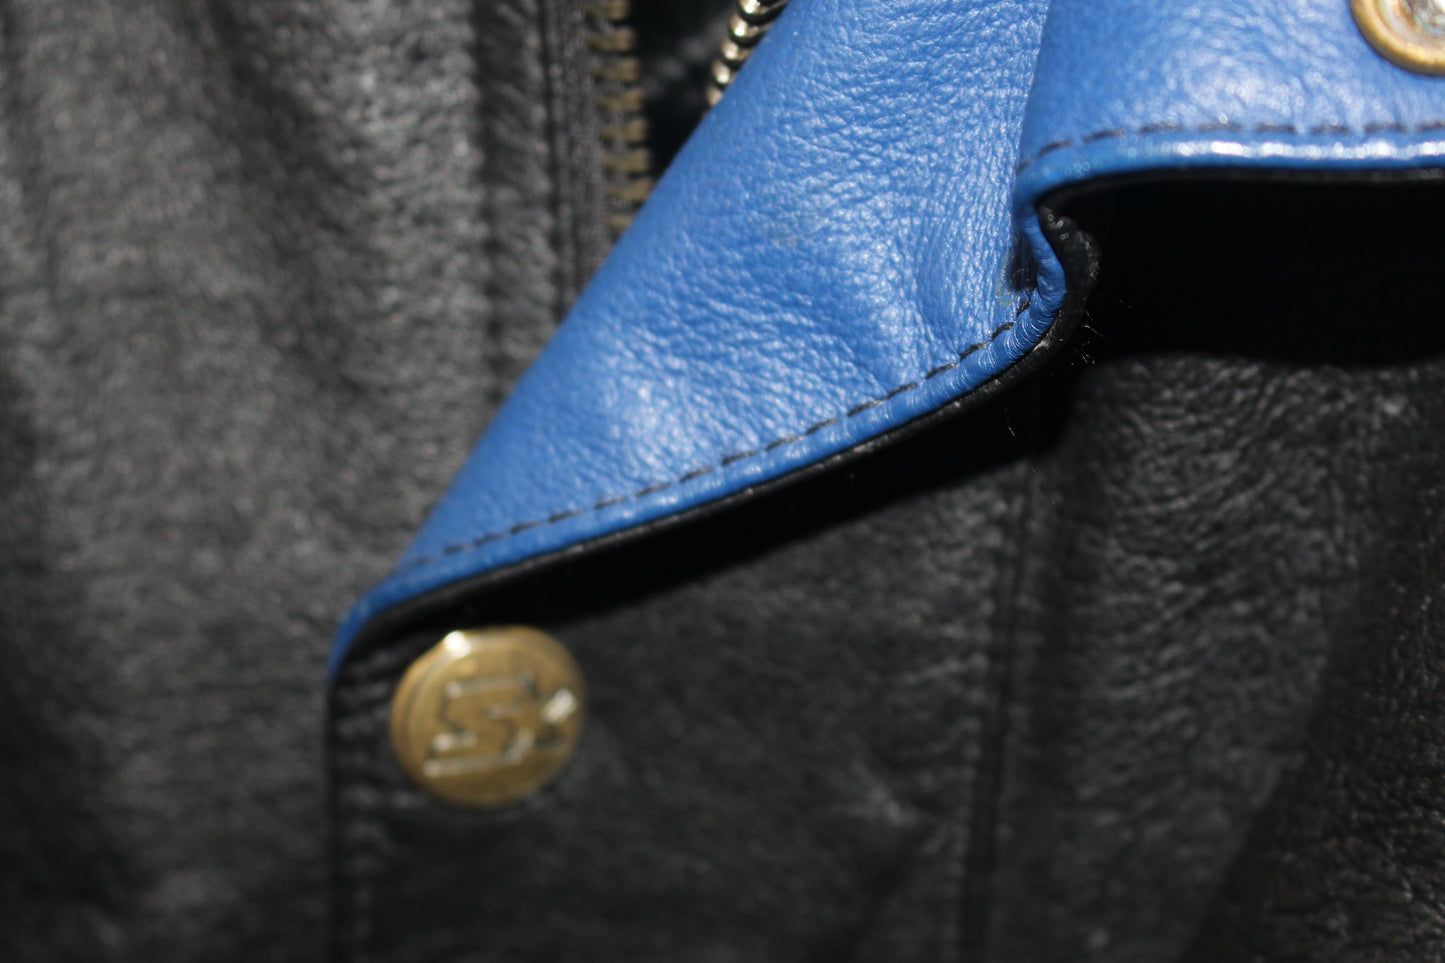 St Louis Rams Pro Line Starter Leather Jacket (L)